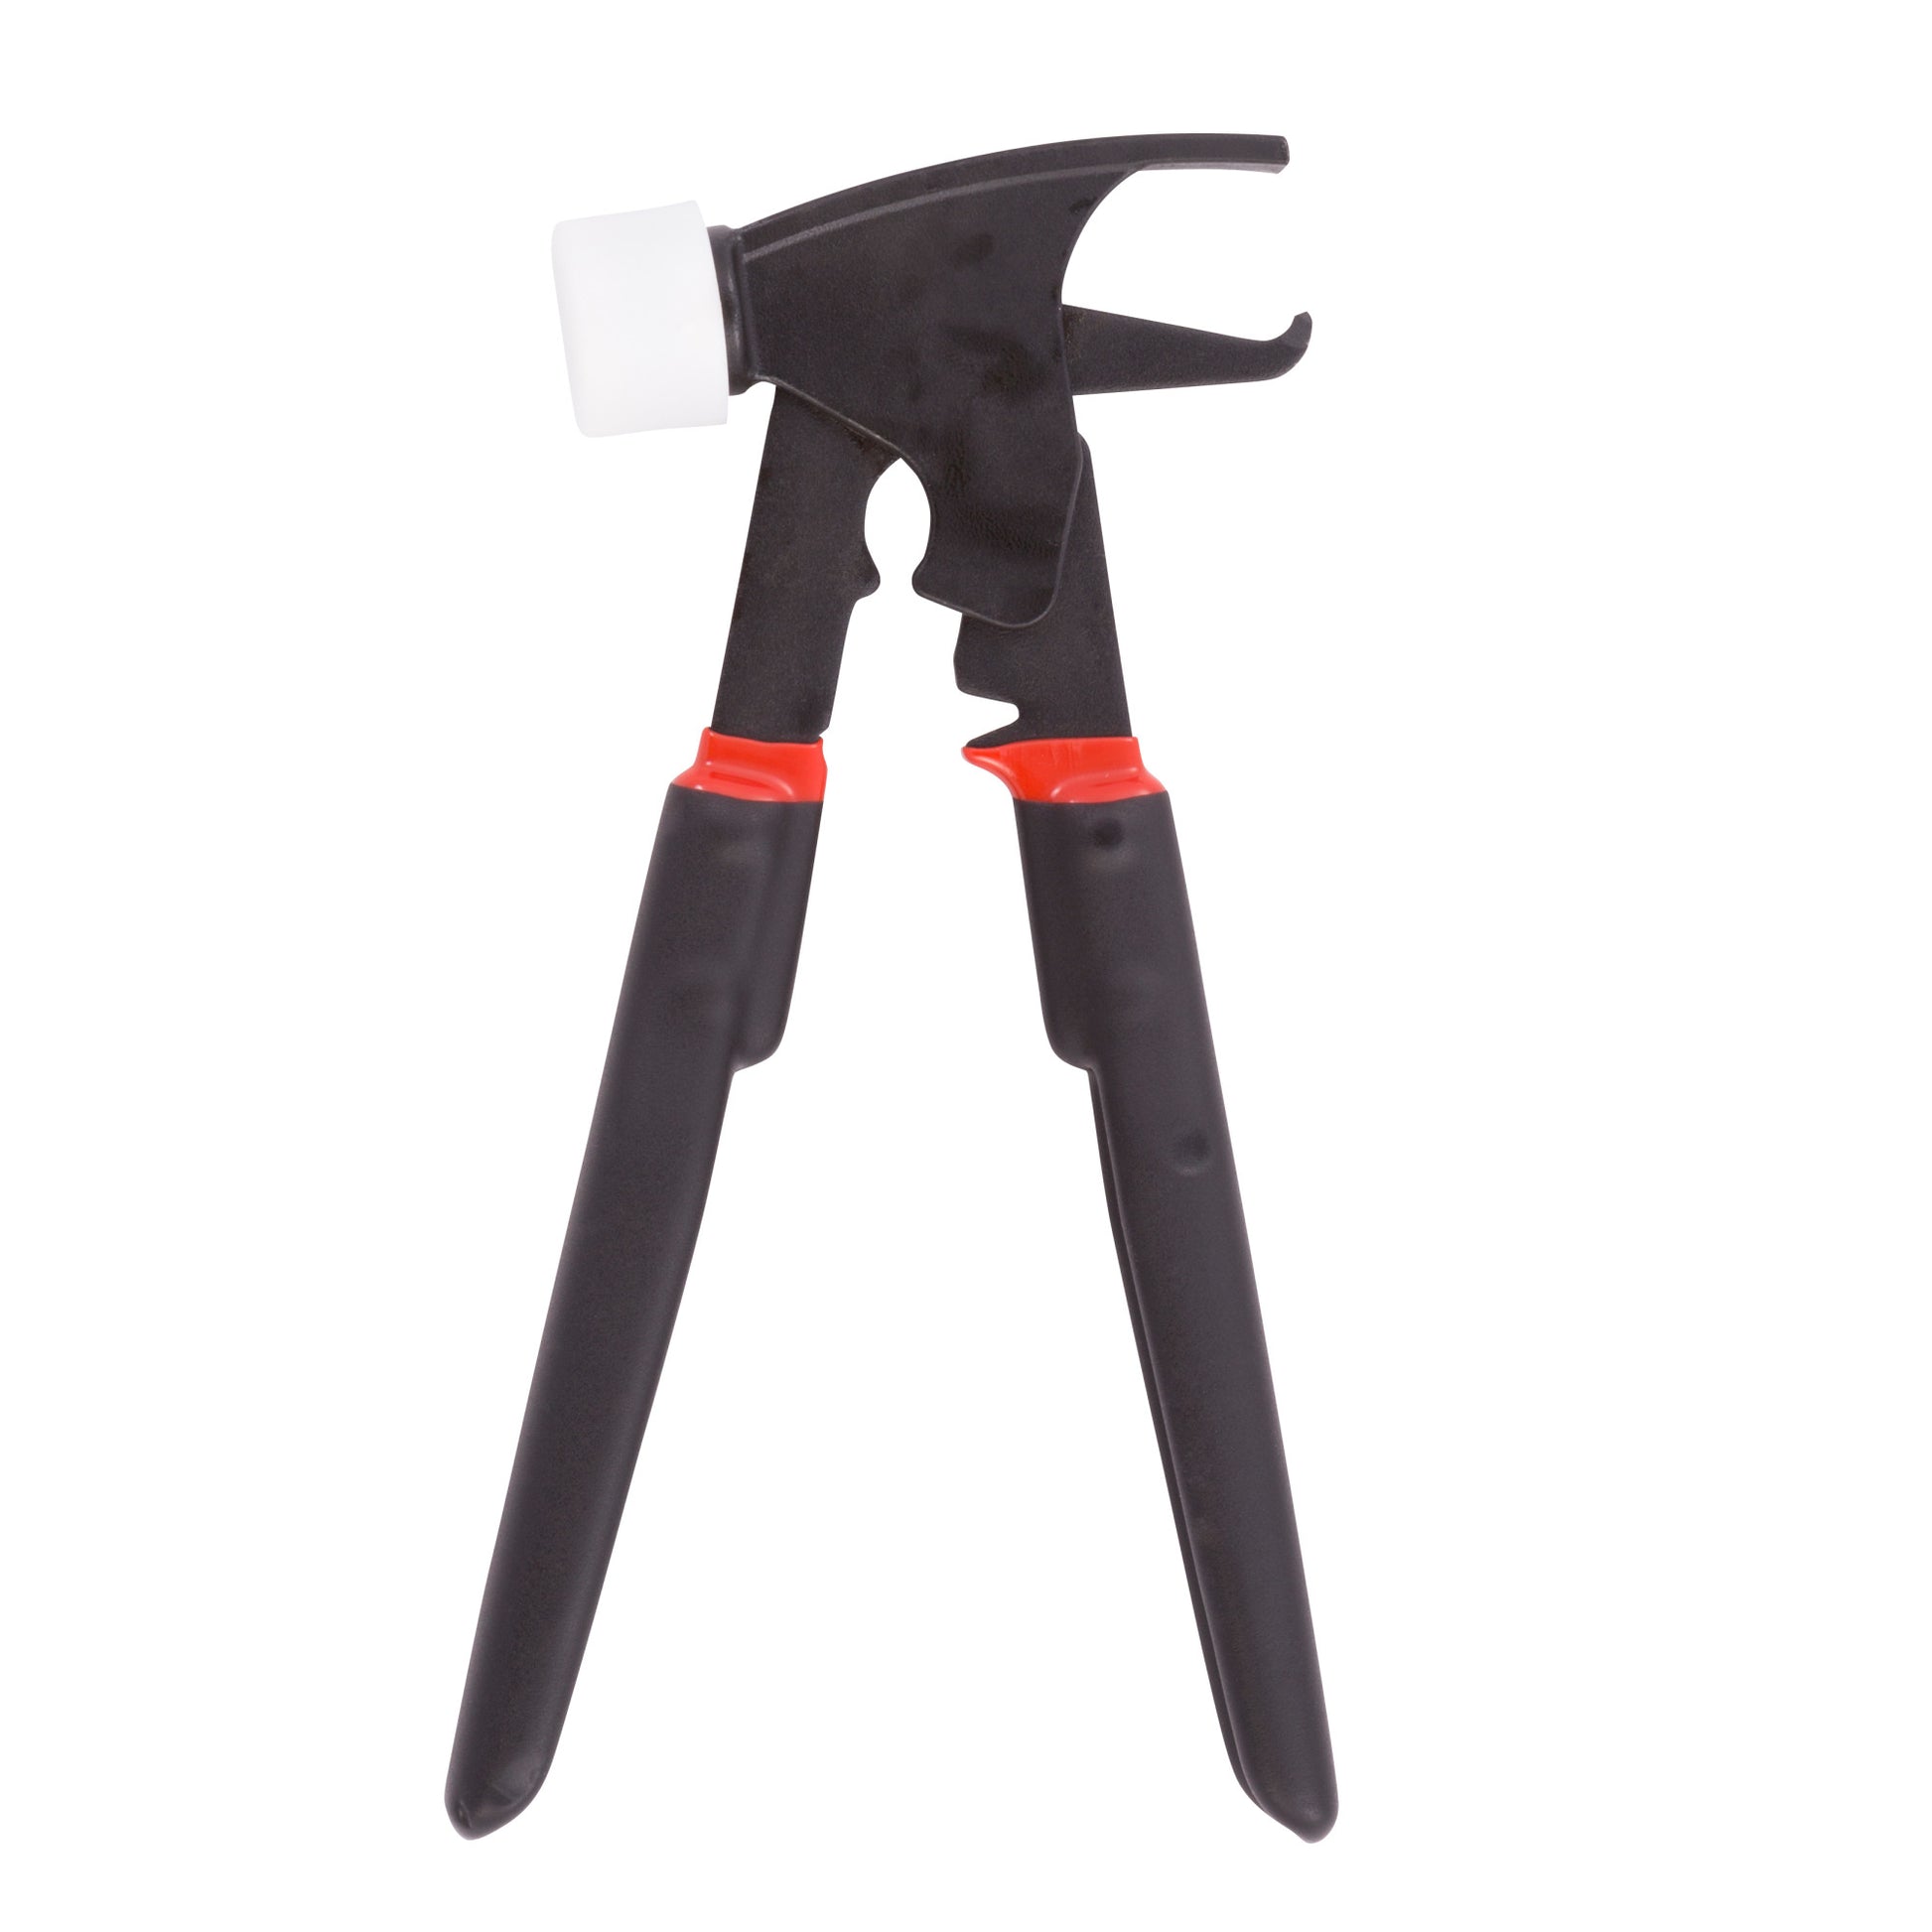 Steelman 3-In-1 Tool – Weight Steelman Hammer Wheel Tools